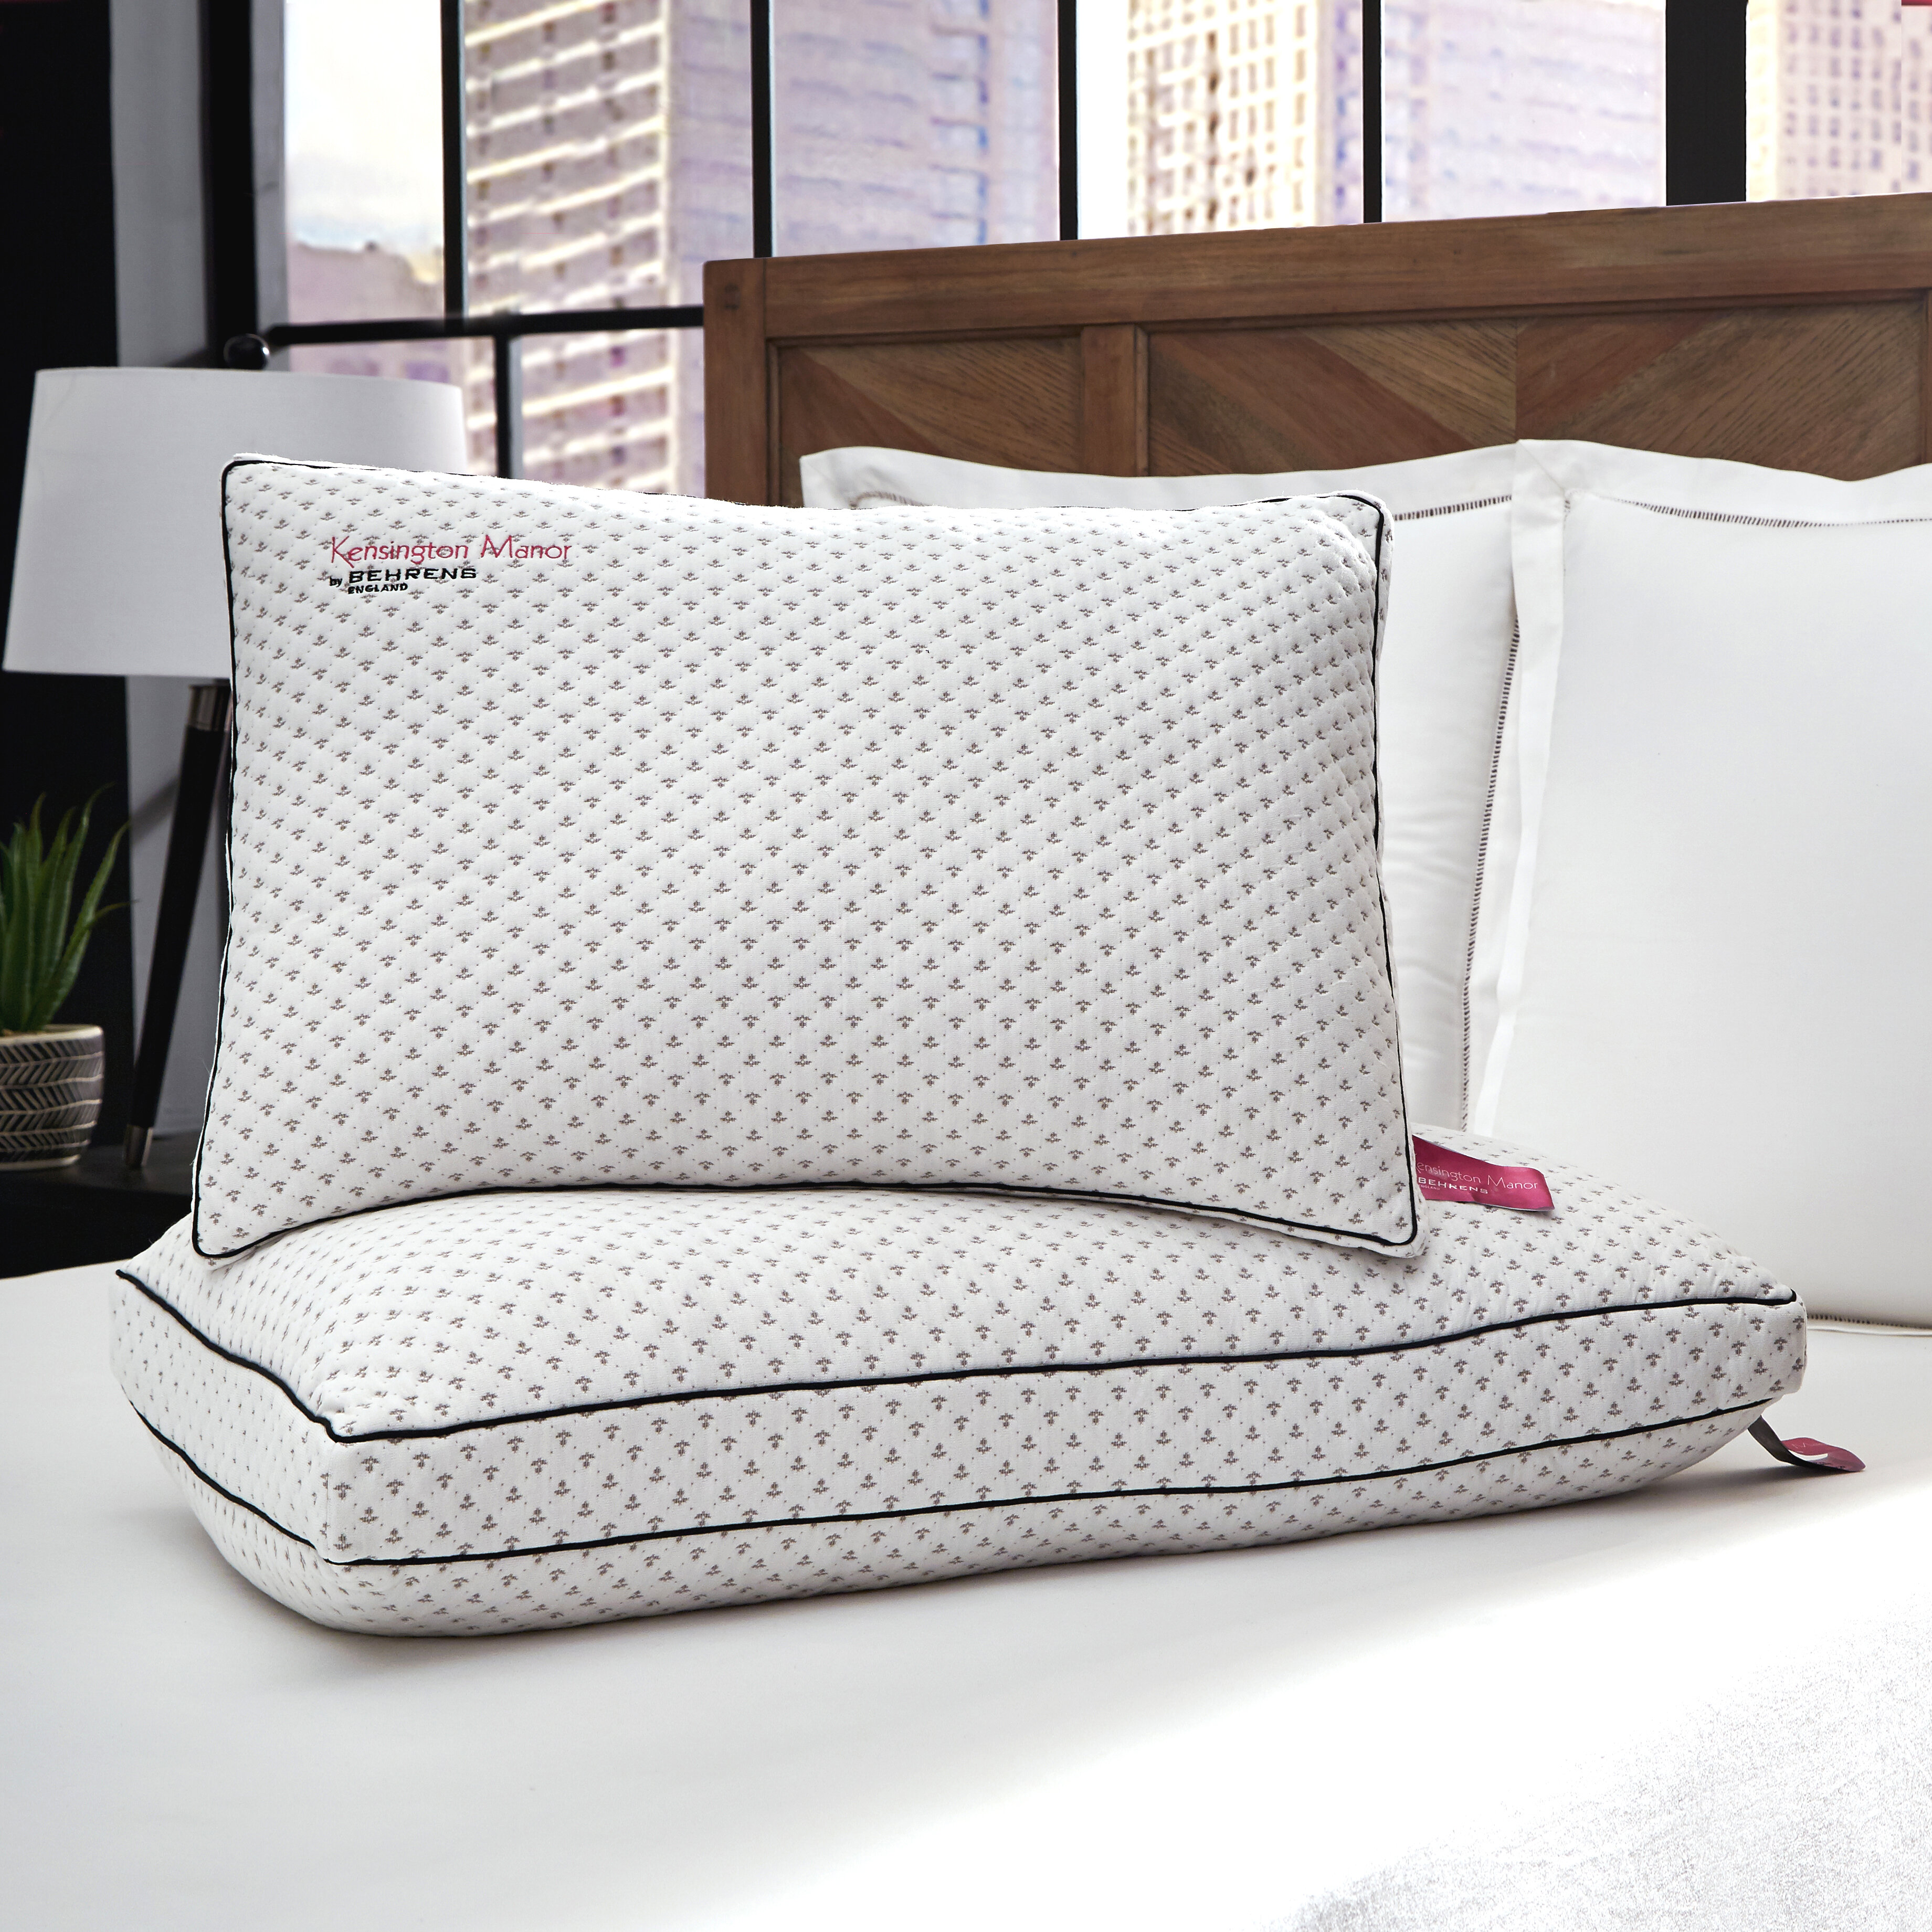 Kensingtons® 2 x Fine Microfibre Luxury Pillows for Sleeping Down Alternative UK 